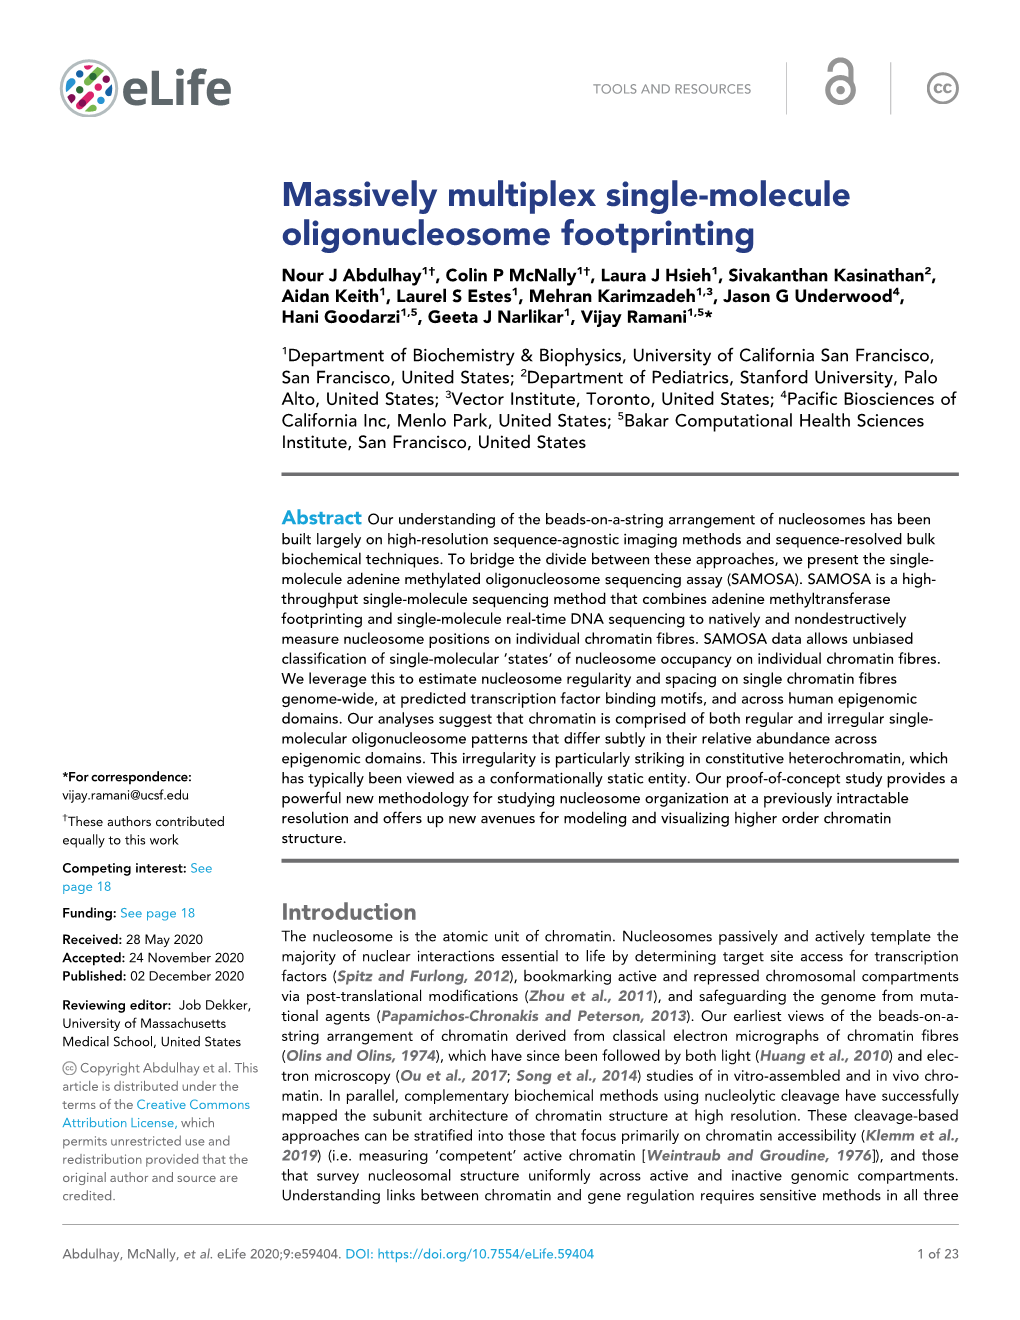 Massively Multiplex Single-Molecule